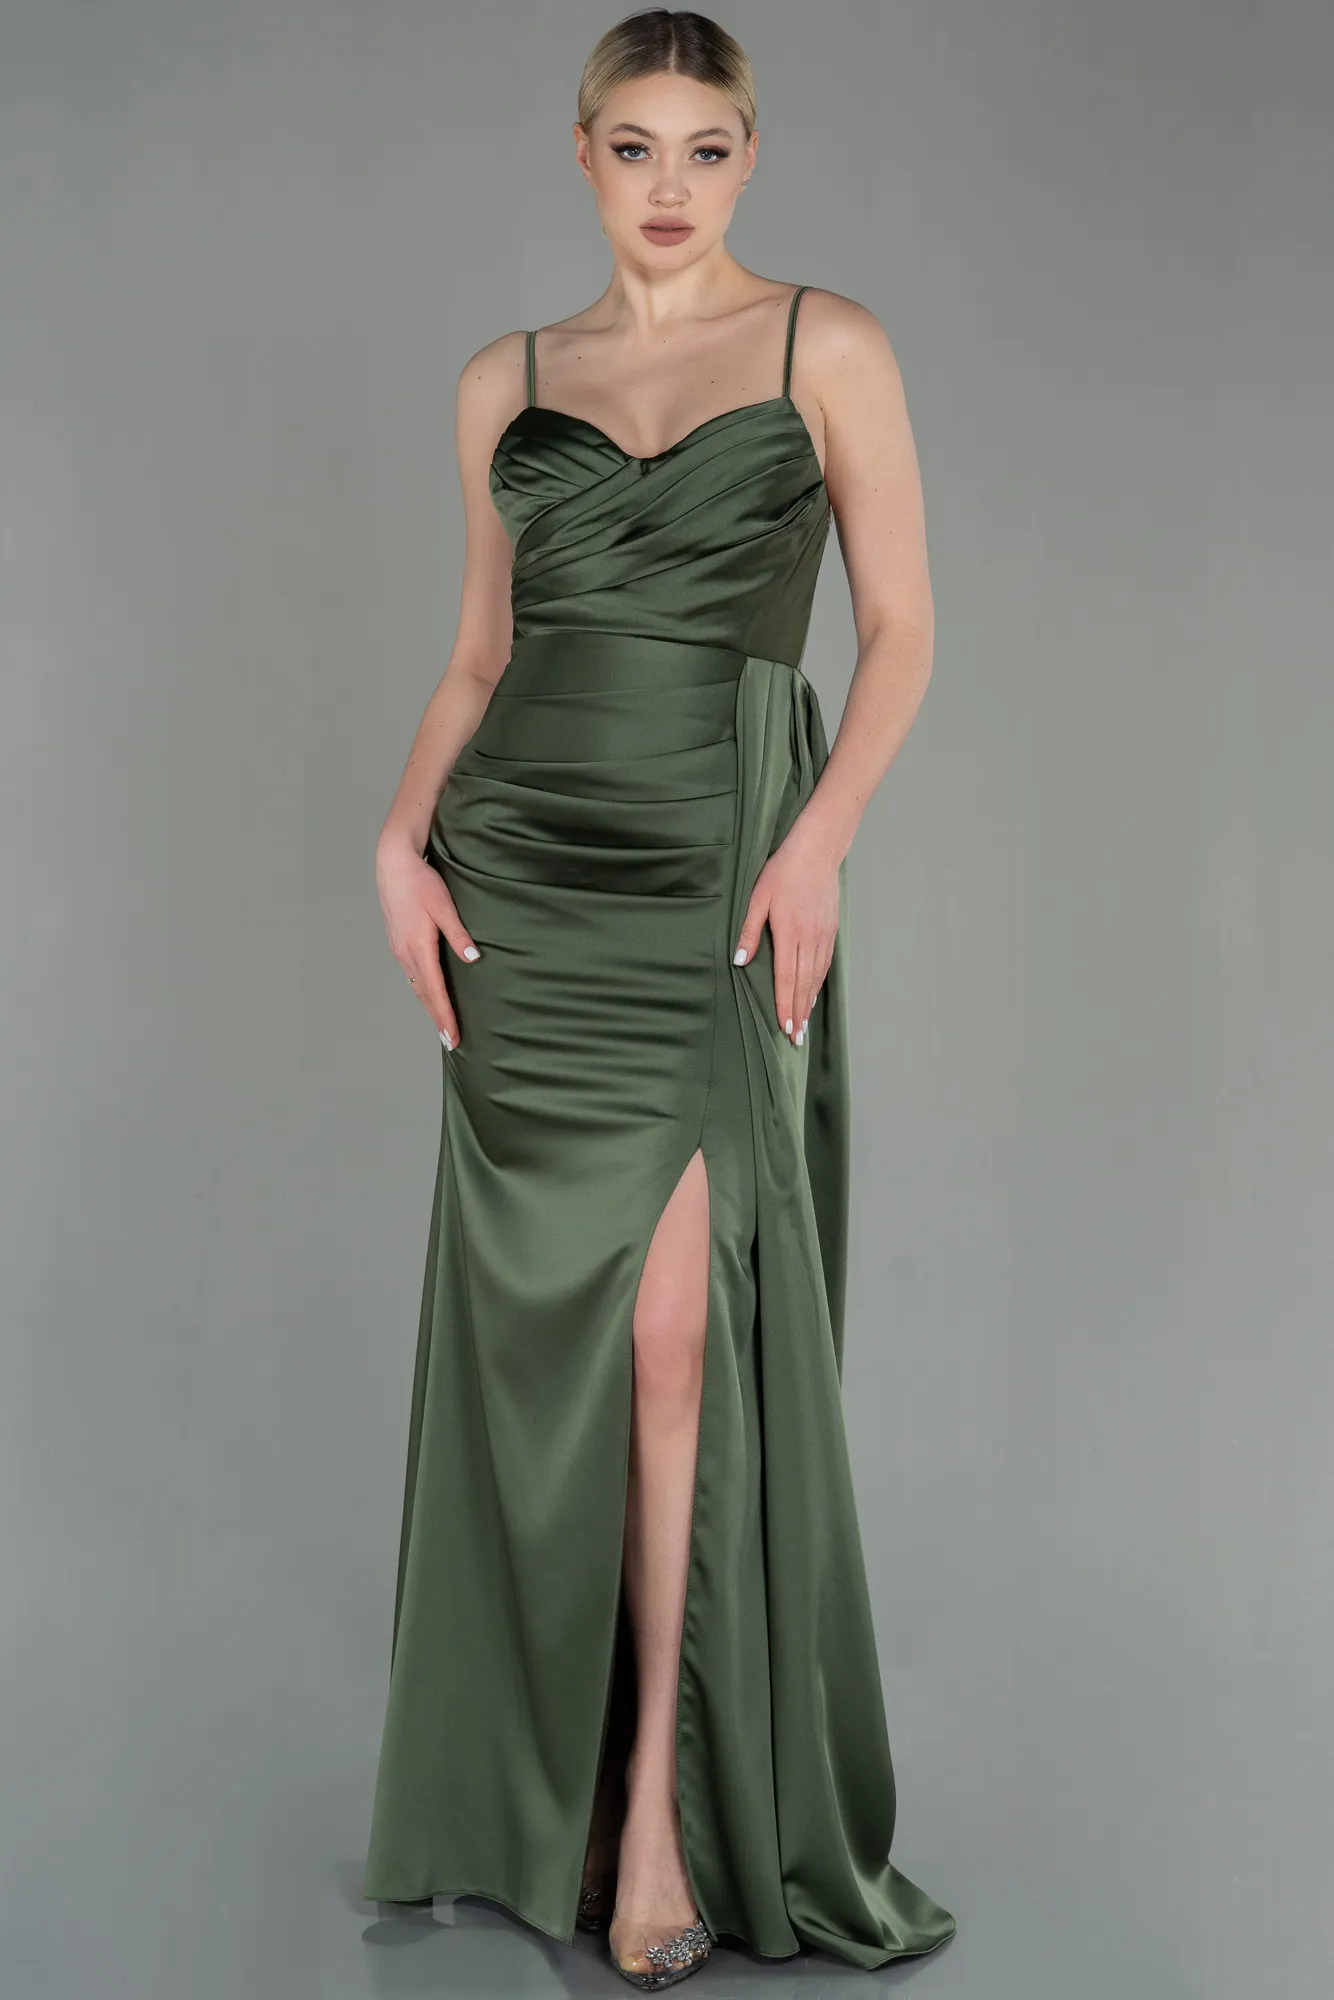 Olive Drab-Long Satin Mermaid Evening Dress ABU1894